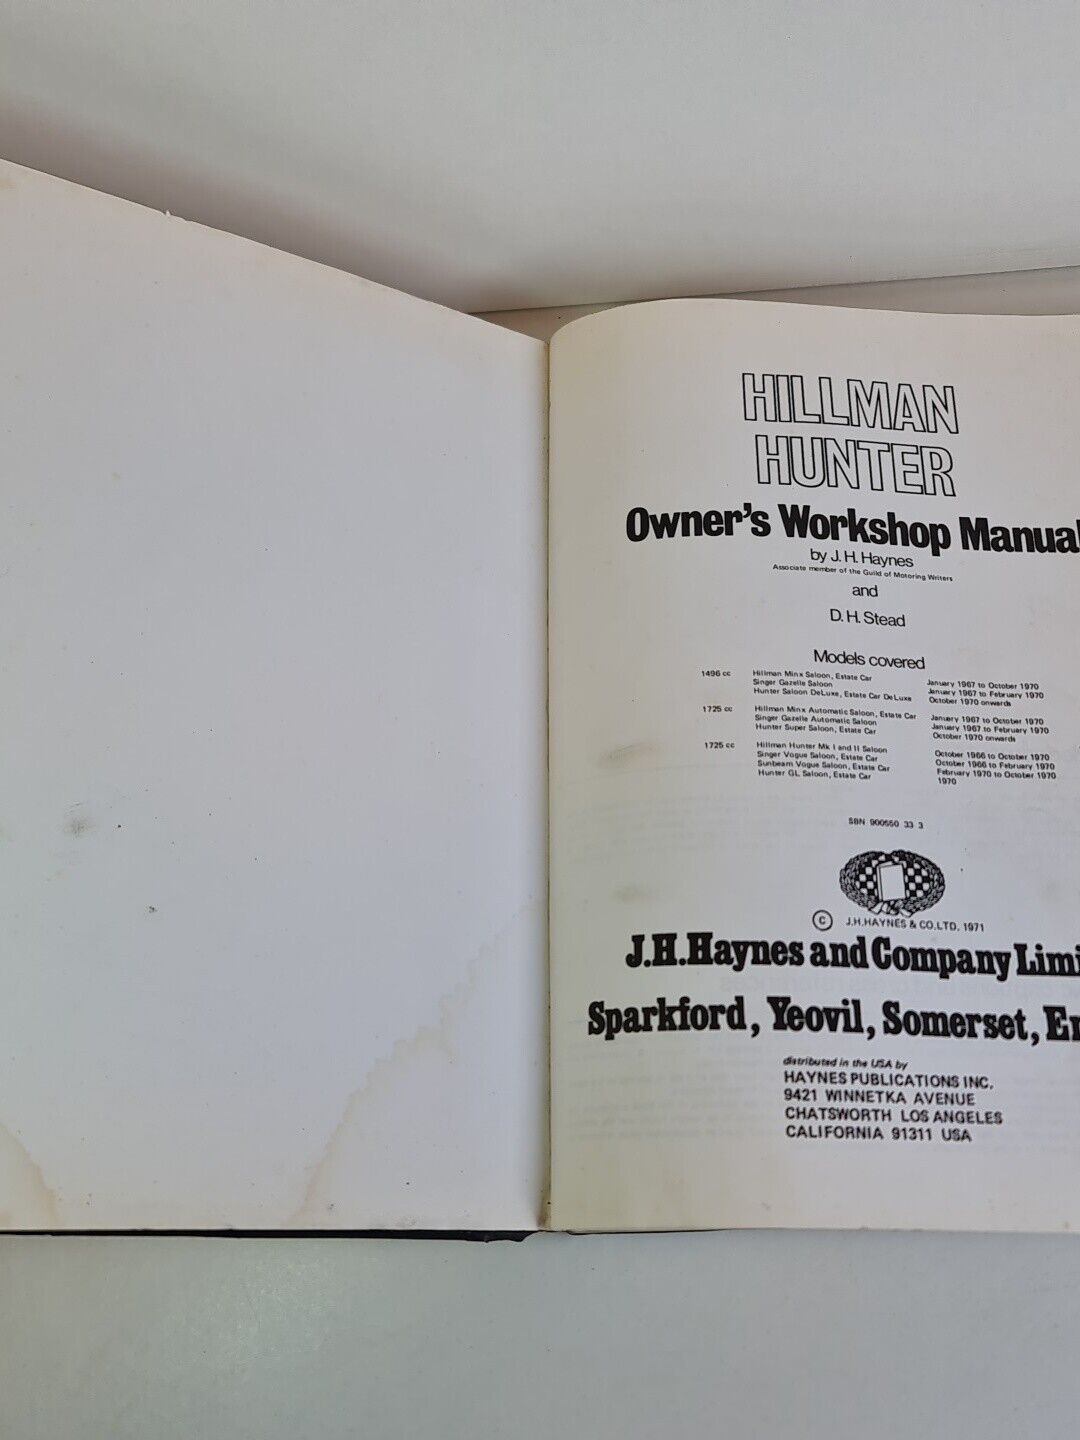 Haynes - Hillman Hunter Owner's Workshop Manual by J.H. Haynes (1971)